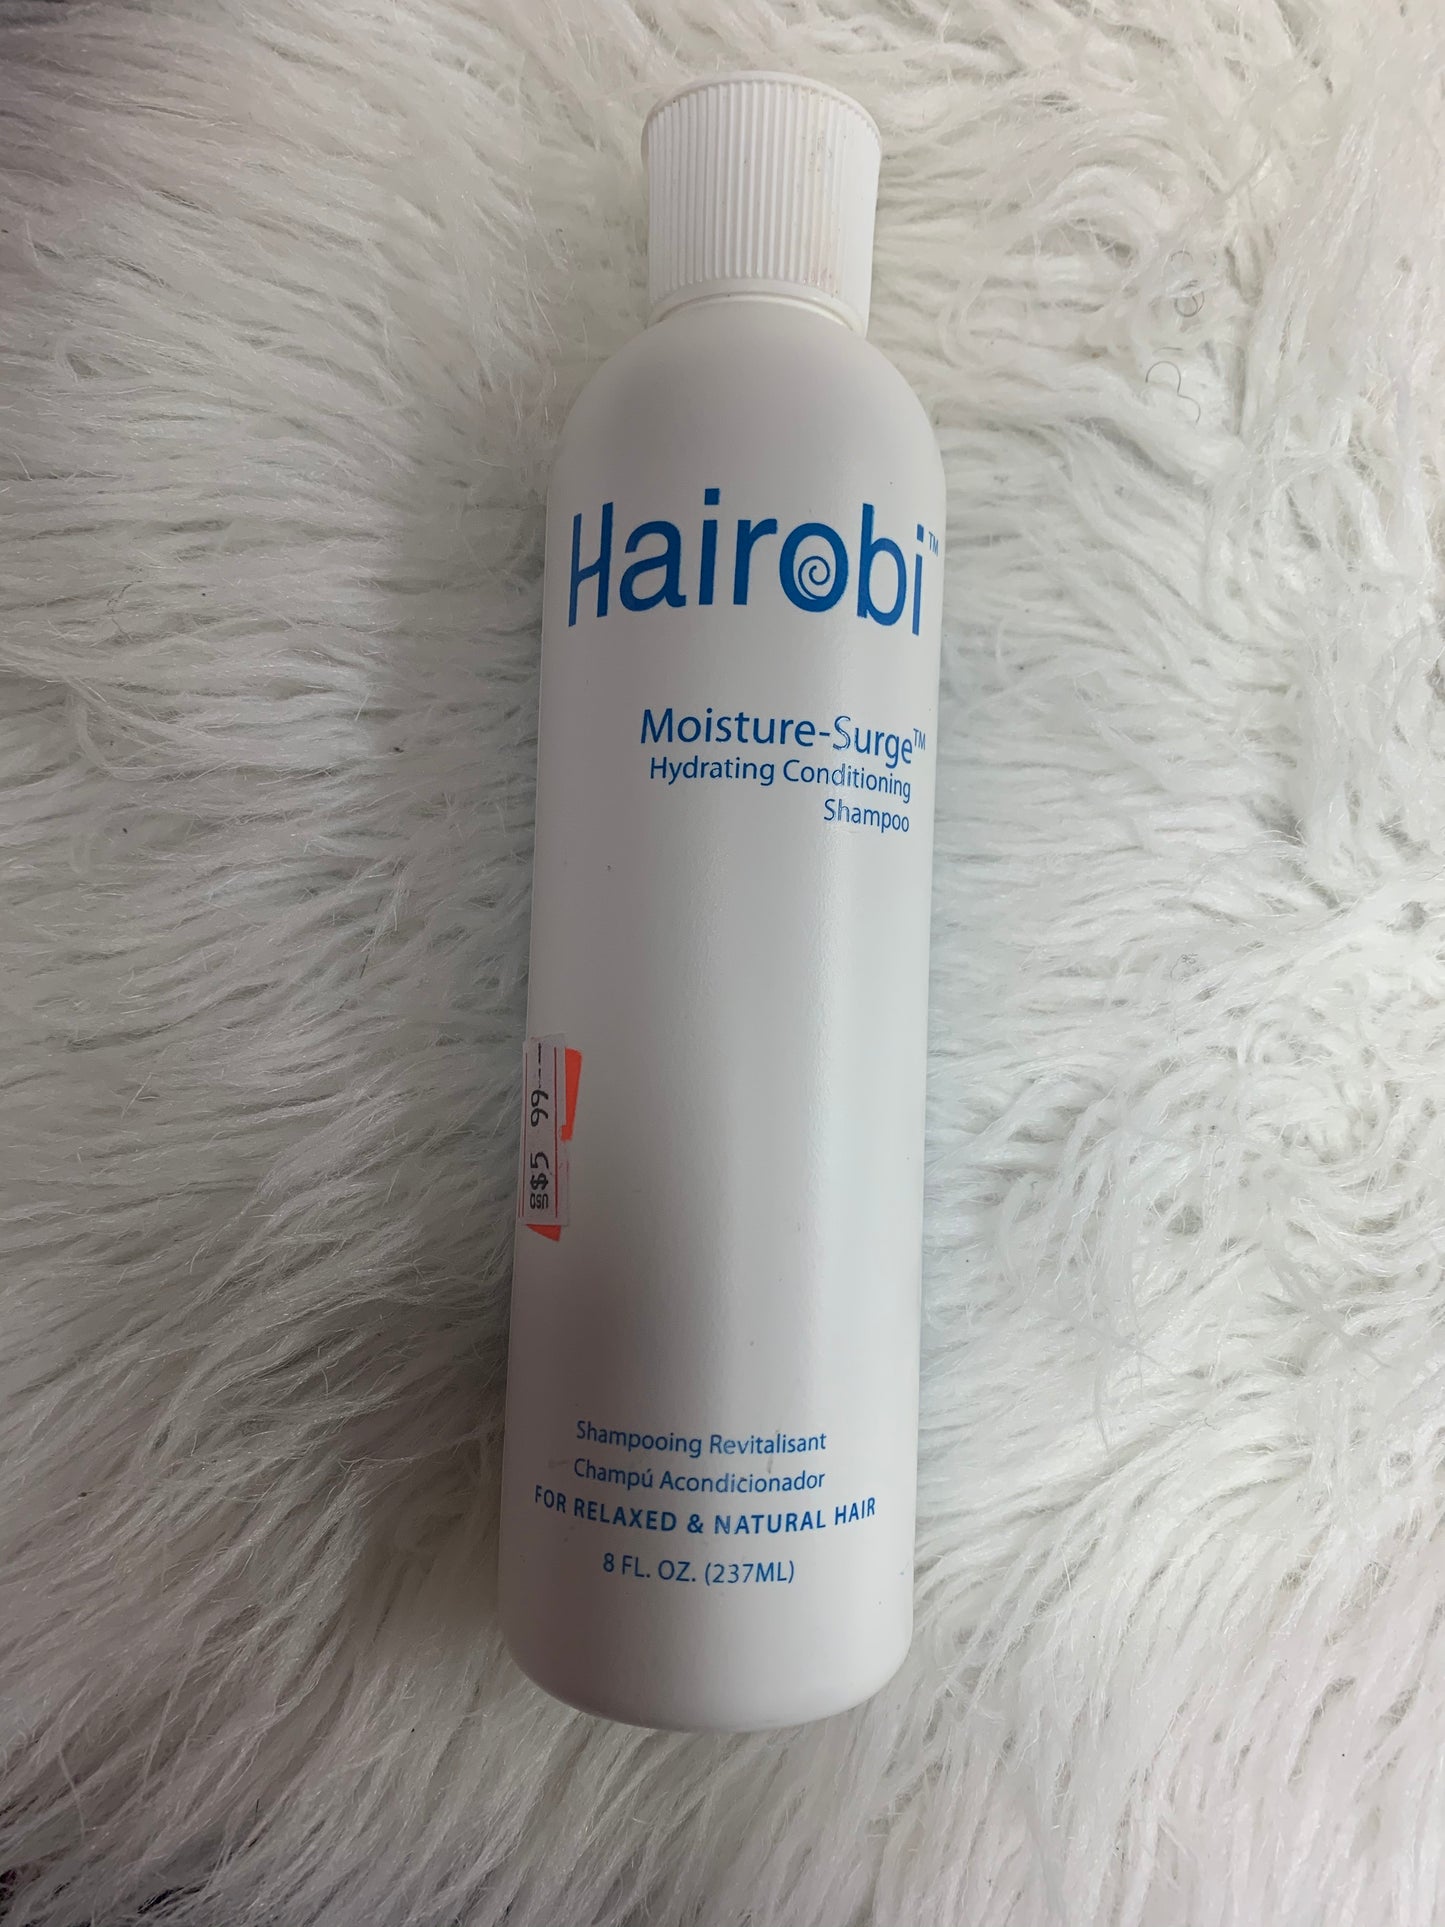 Hairobi: Moisture Surge Hydrating Conditioning Shampoo